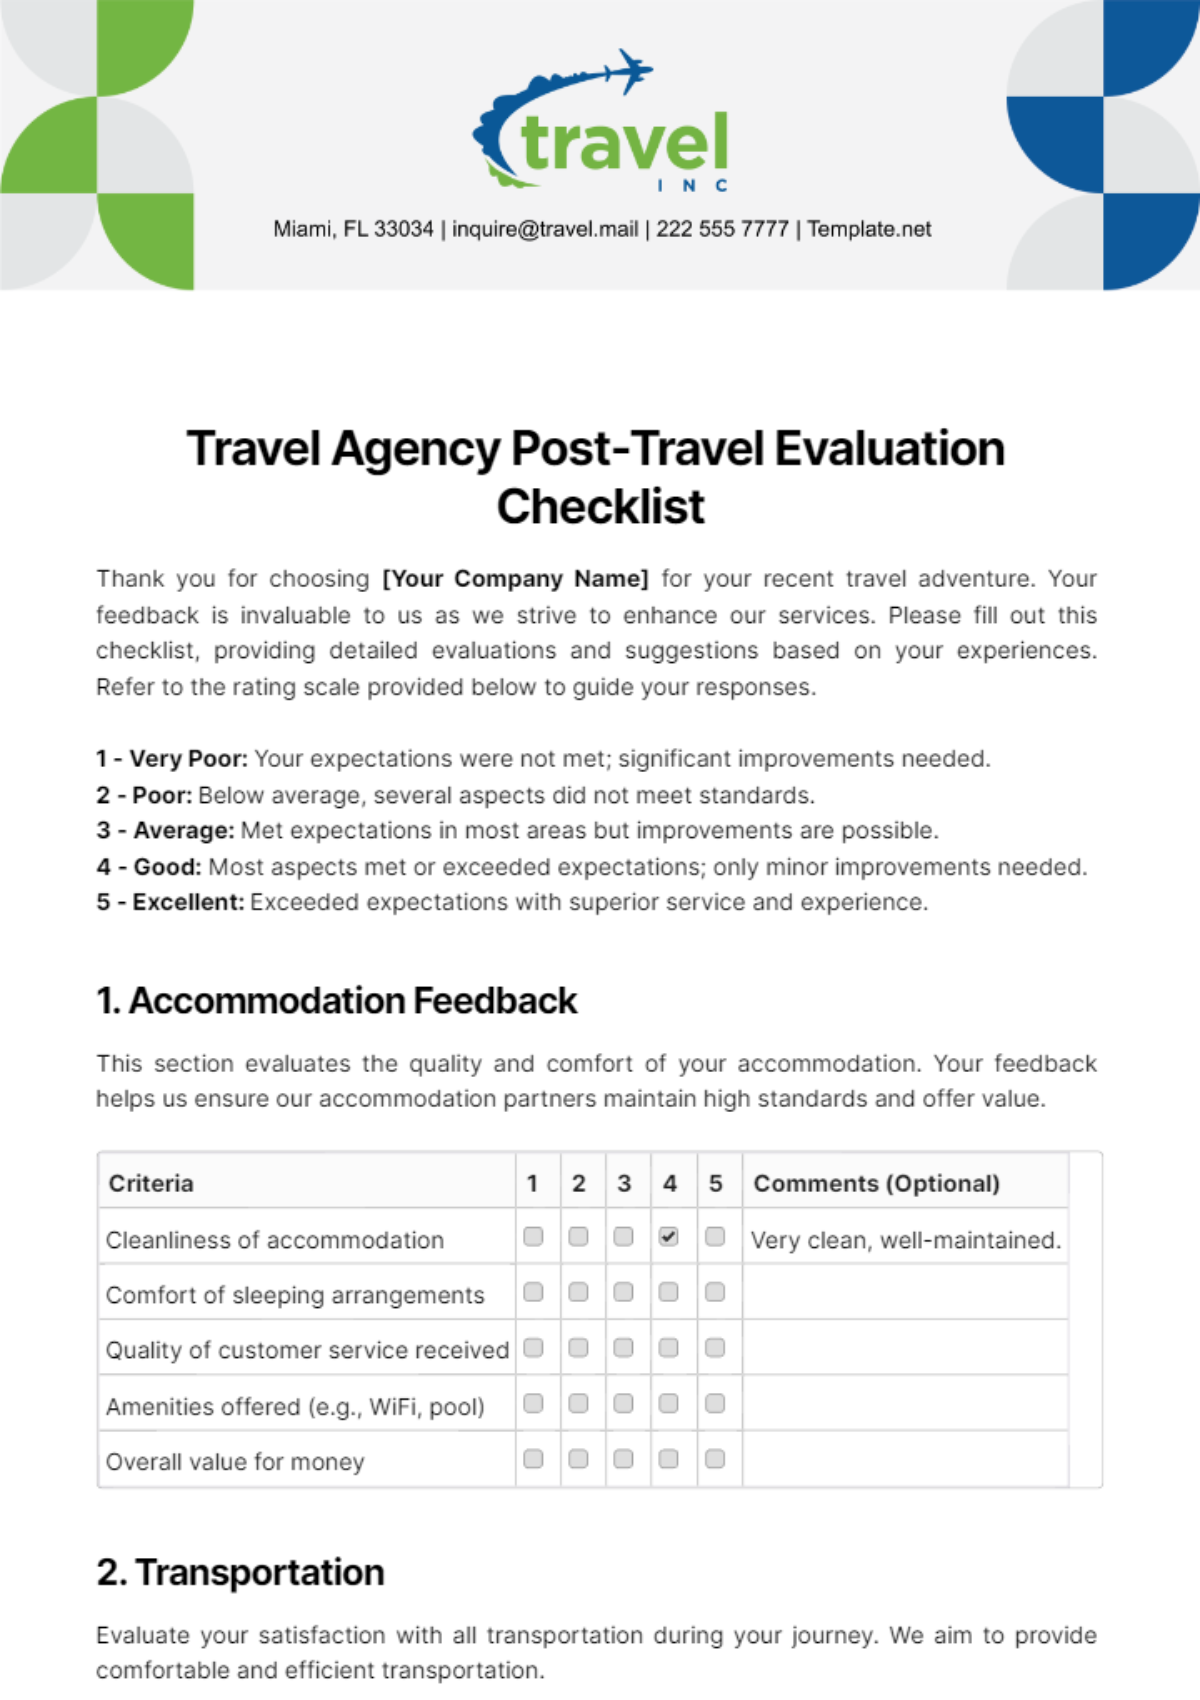 Travel Agency Post-Travel Evaluation Checklist